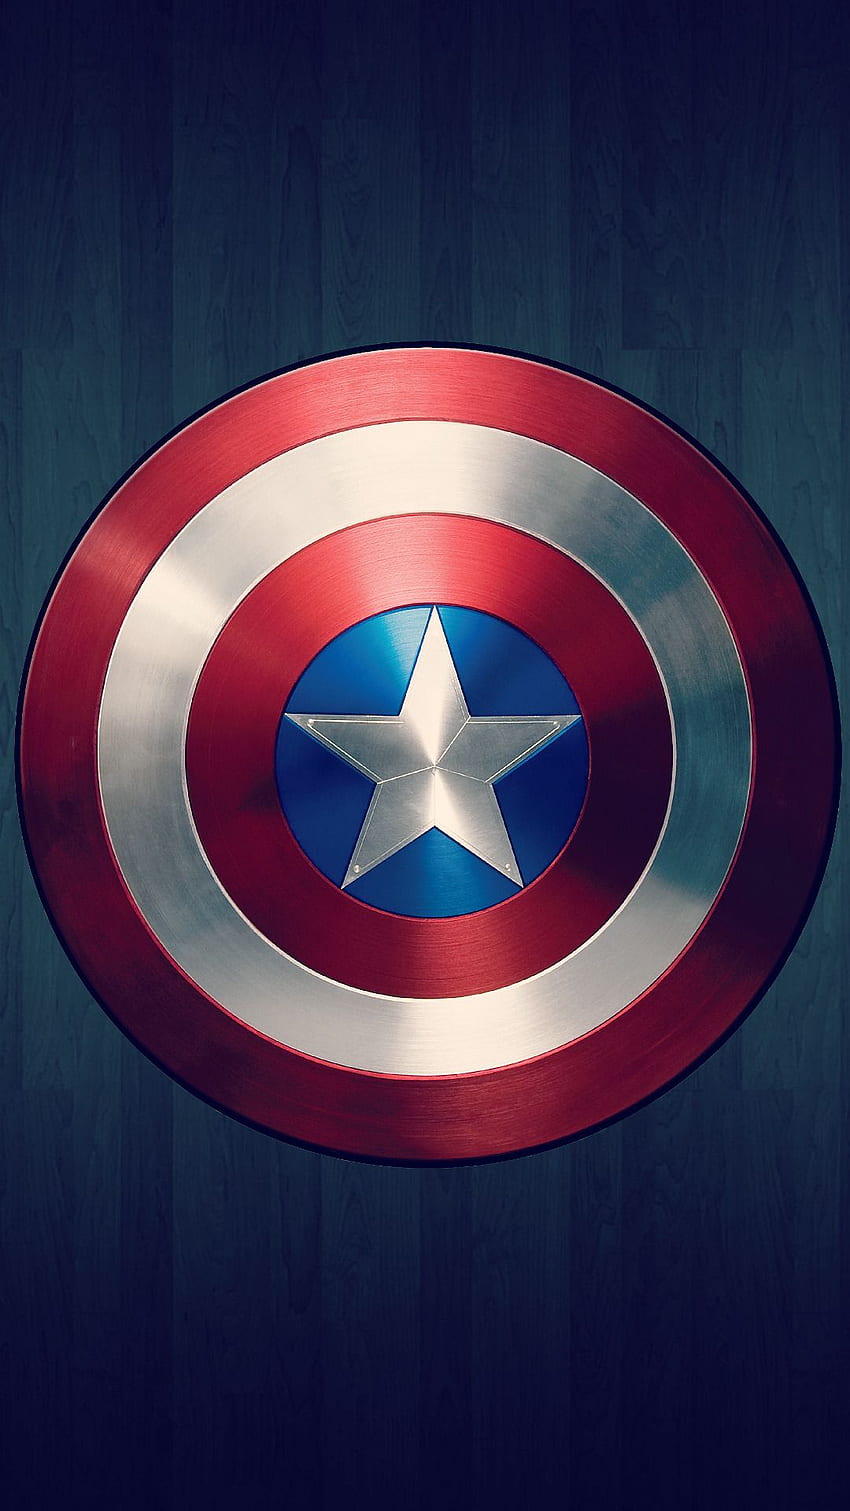 Captain America logo  Captain america shield wallpaper Captain america  wallpaper Captain america art